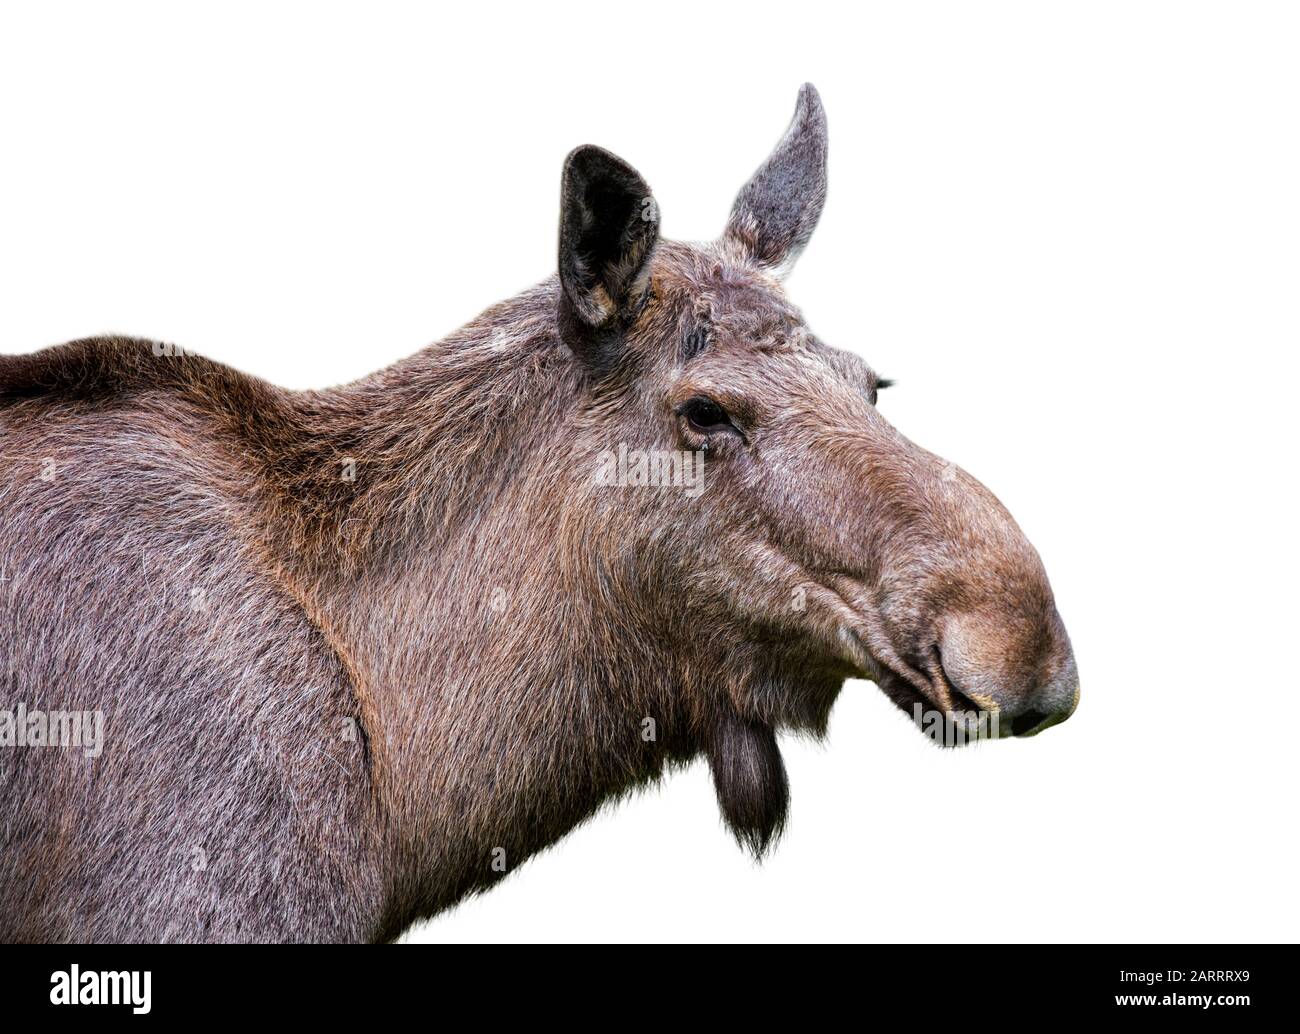 Moose (Alces alces) female / cow close up portrait against white background Stock Photo